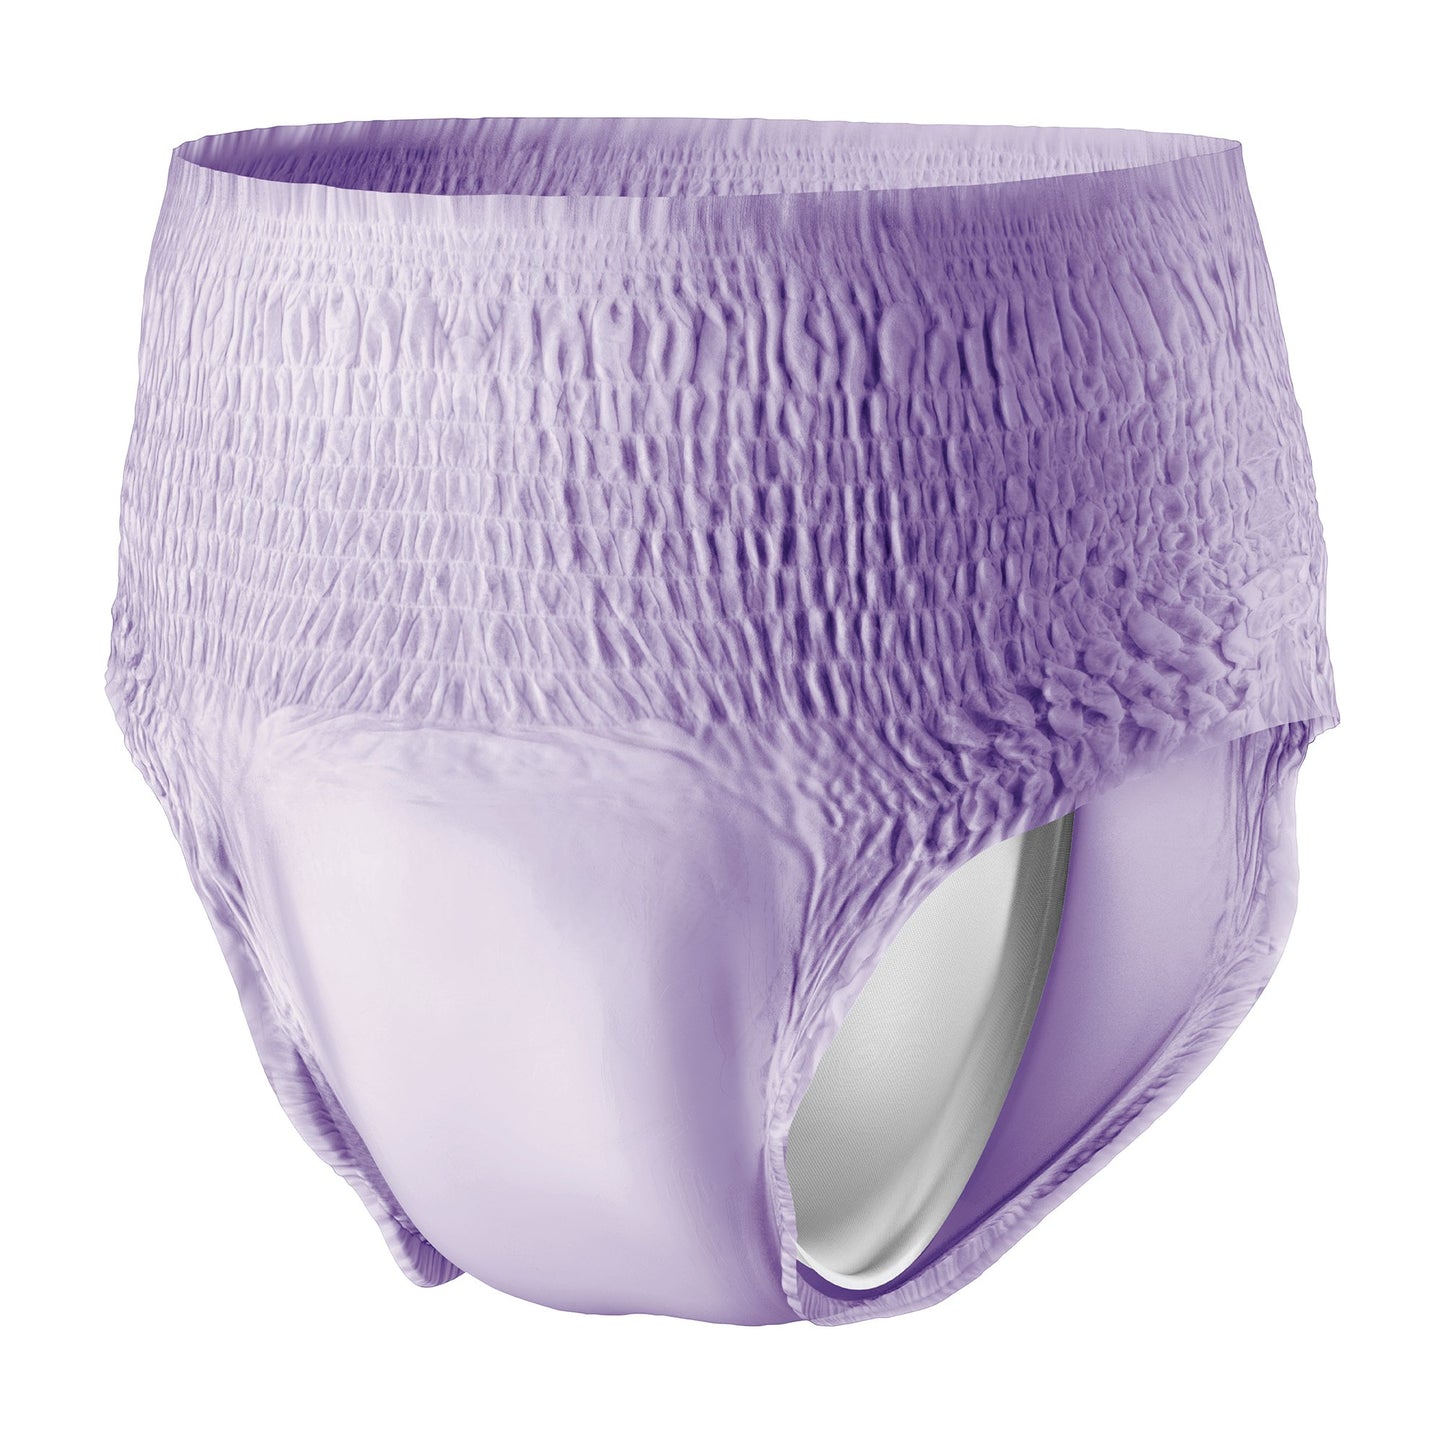 Prevail® for Women Daily Maximum Absorbent Underwear, Medium, 80 ct